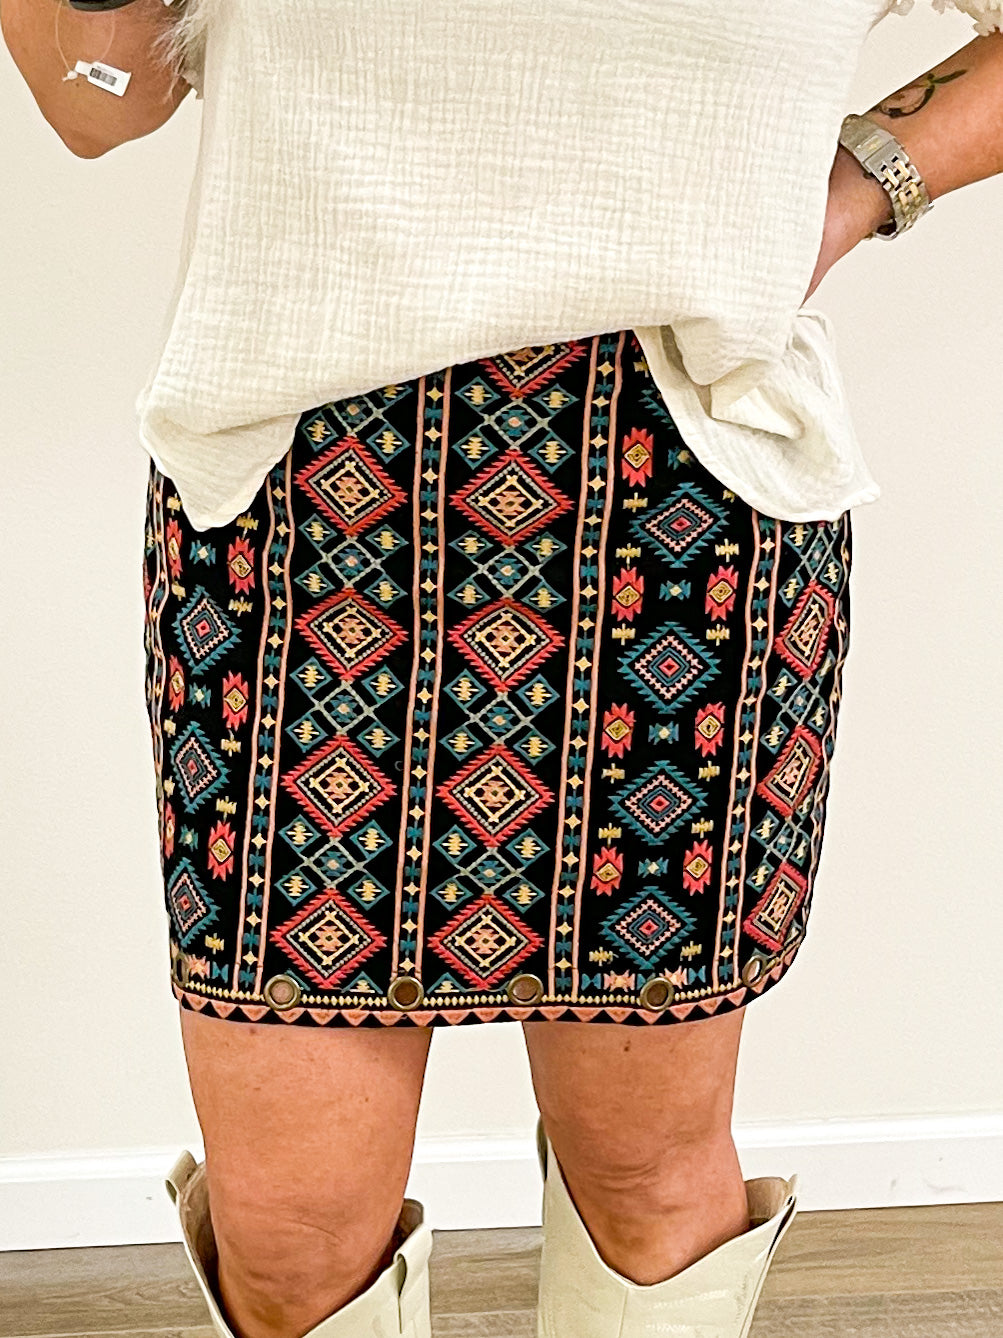 Trina Embroidered Skirt